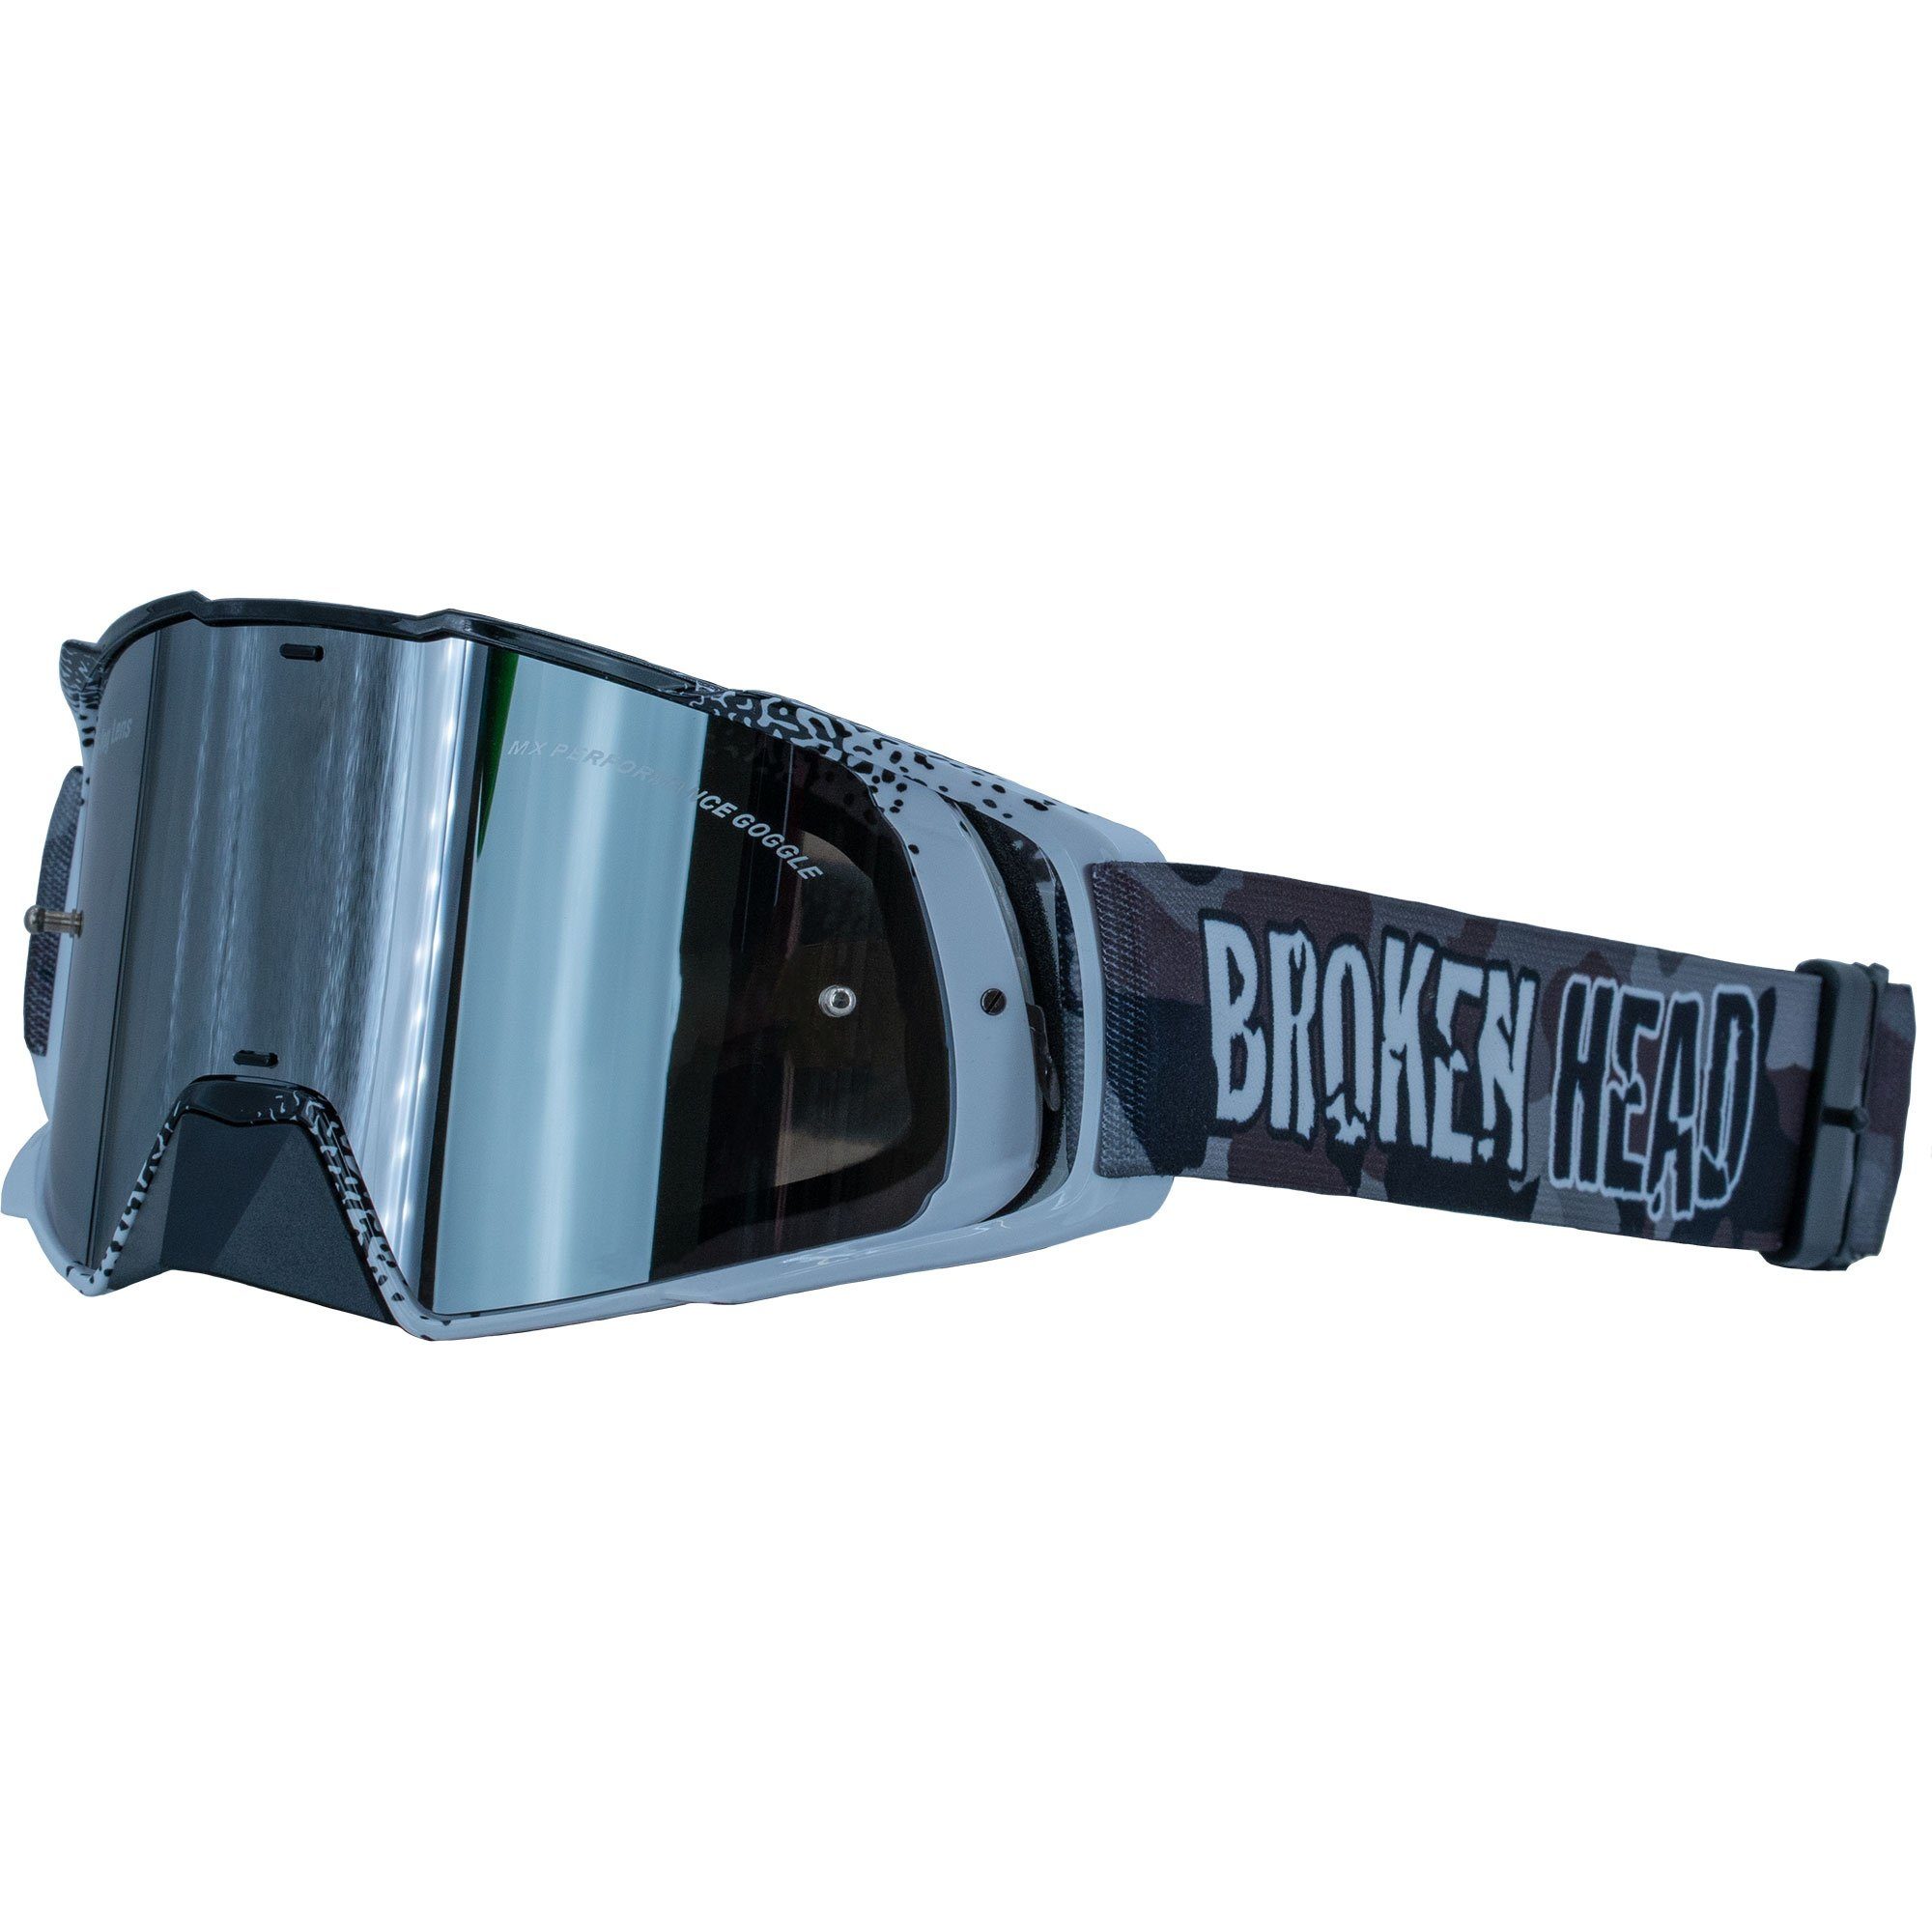 Schwarz, Größe MX-Regulator verstellbar Motorradbrille Broken Head